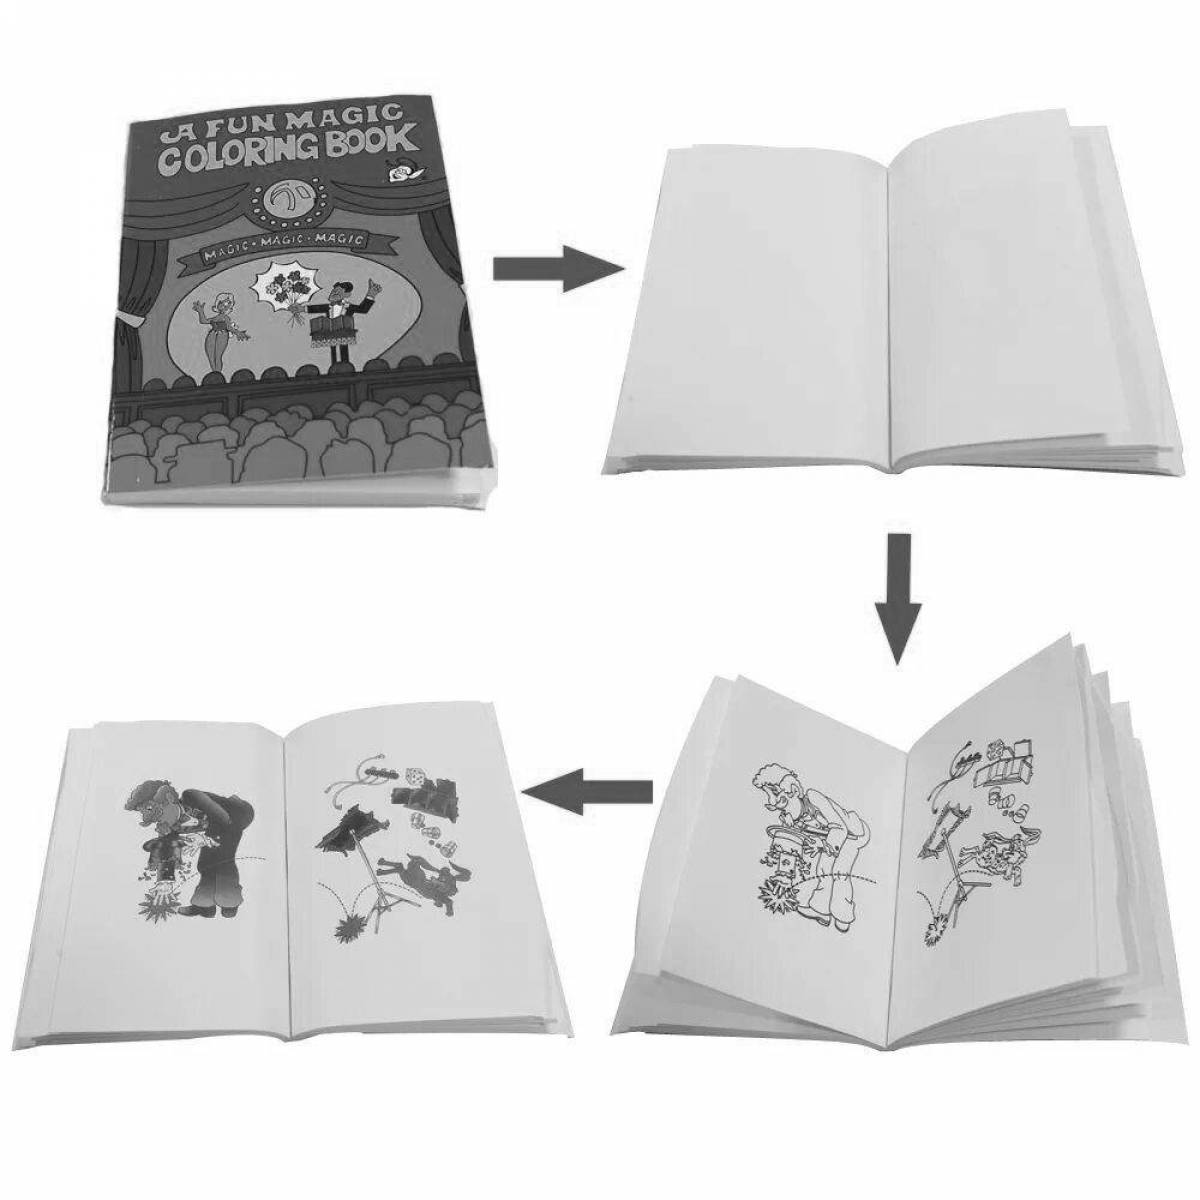 Magic magic book deluxe coloring book